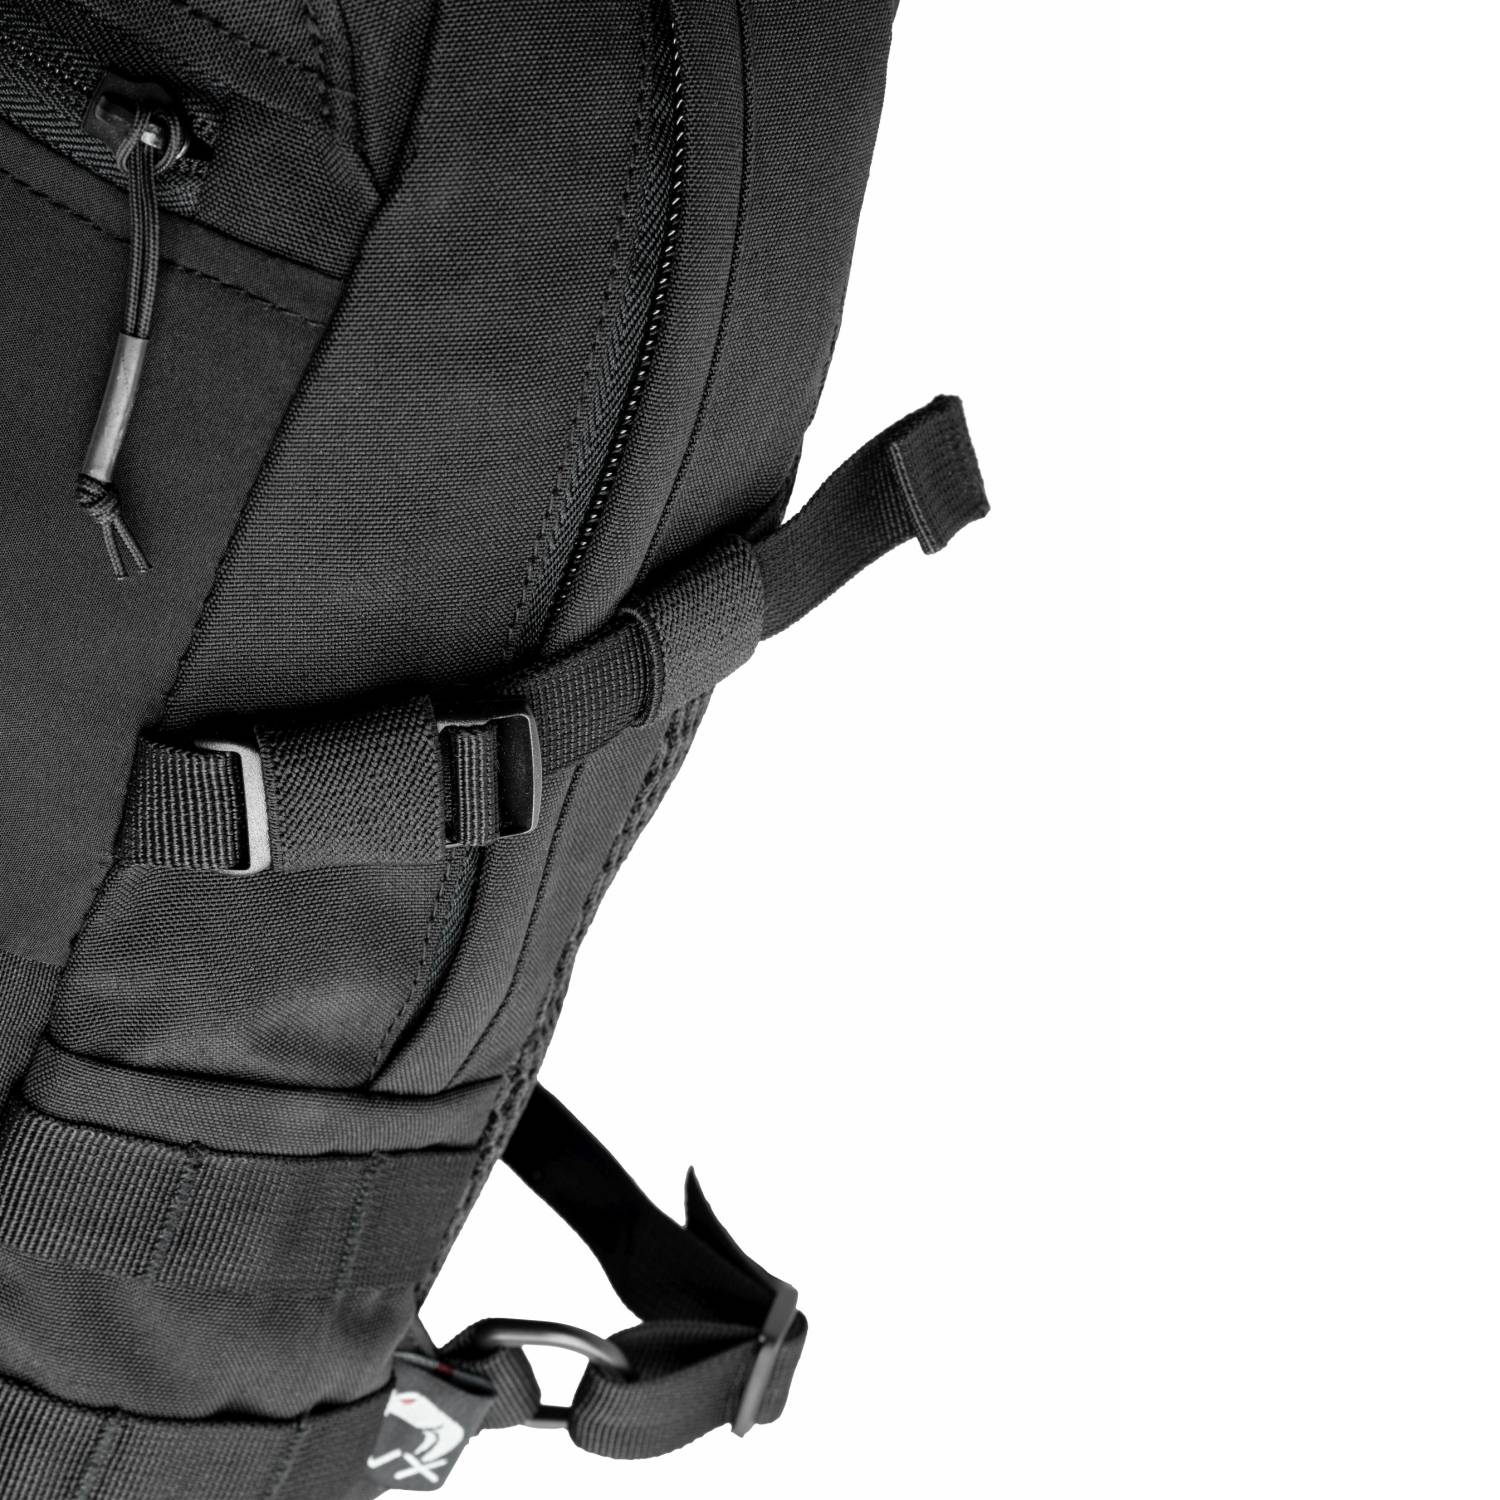 Viper VX Vortex Tactical Security EDC Gear Pack Rucksack Backpack Bag 15L Black 